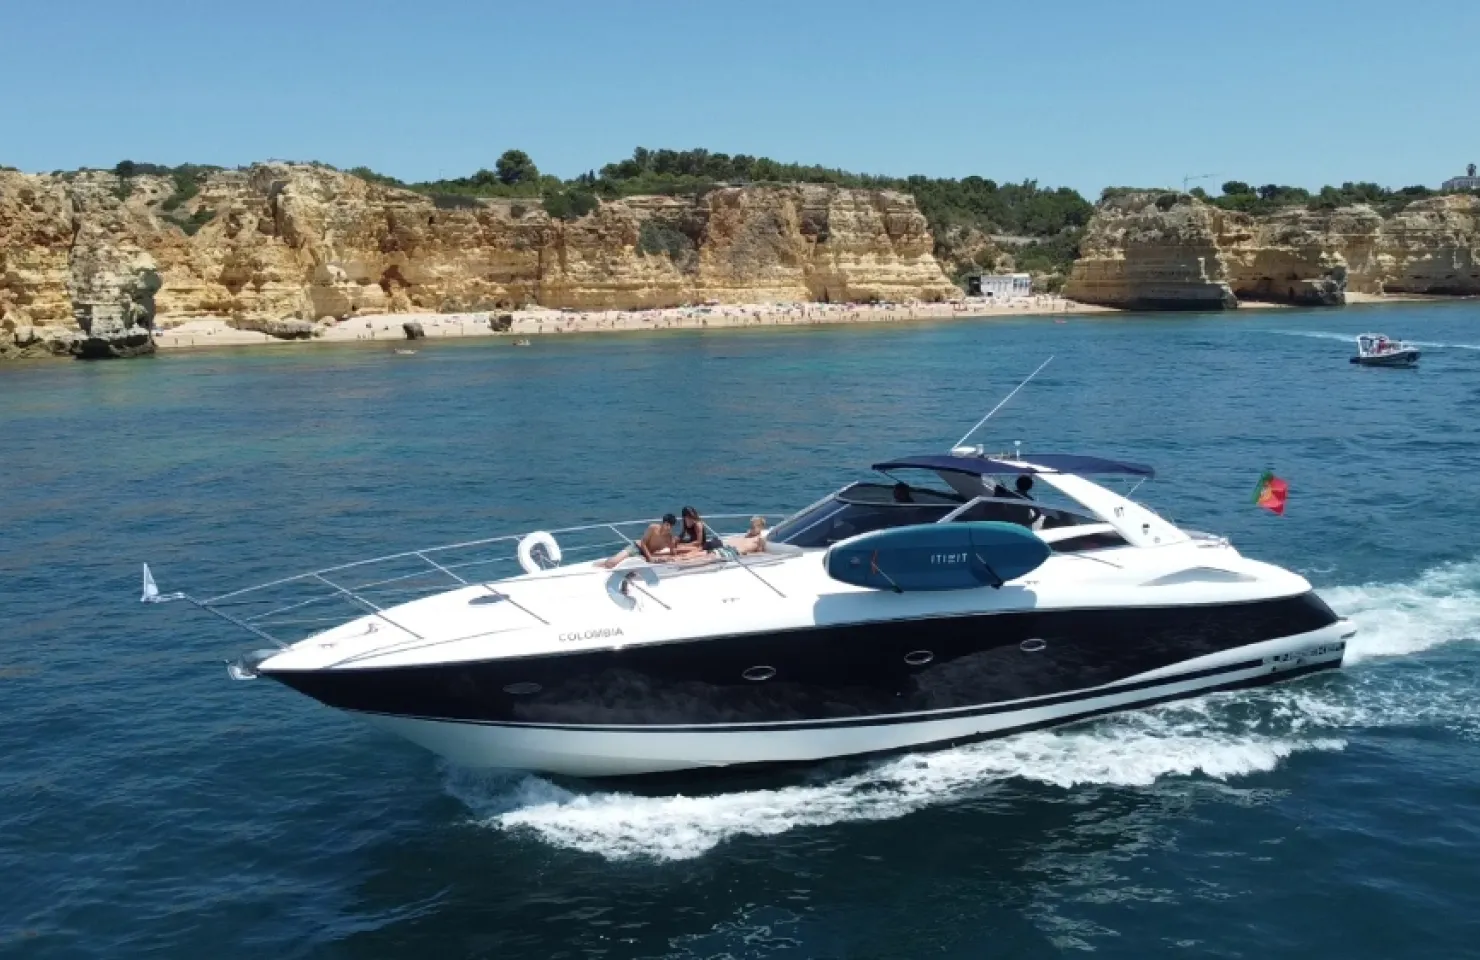 Algarve Yacht Charter - Yacht Hire Algarve